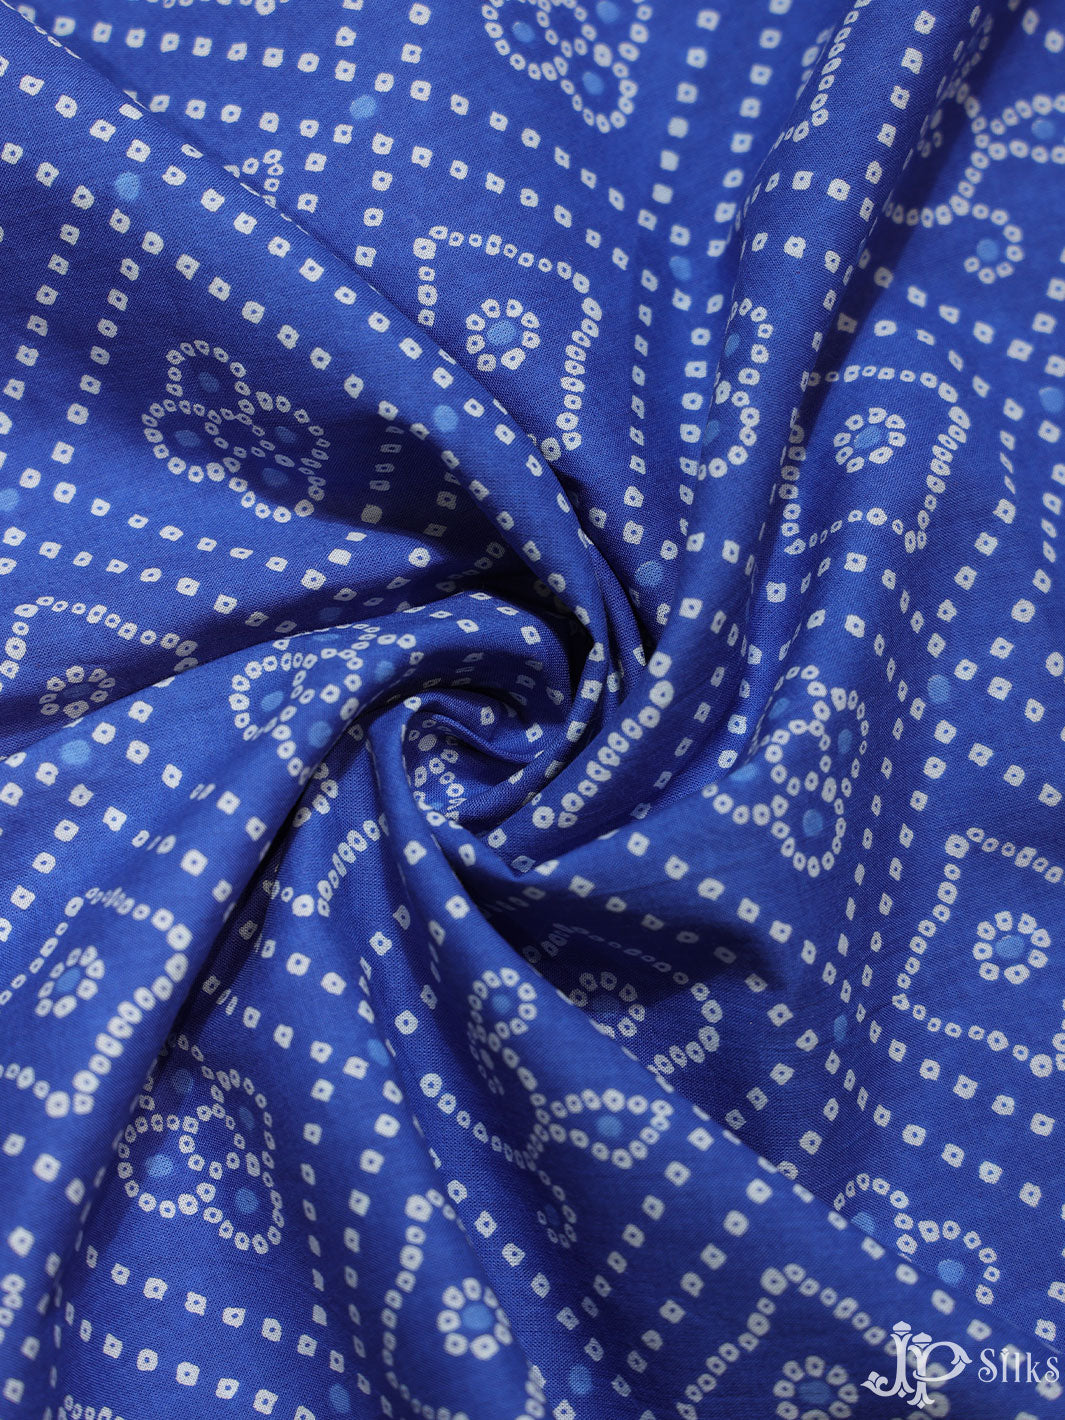 Dark cobalt blue Cotton Fabric - A5947 - View 3